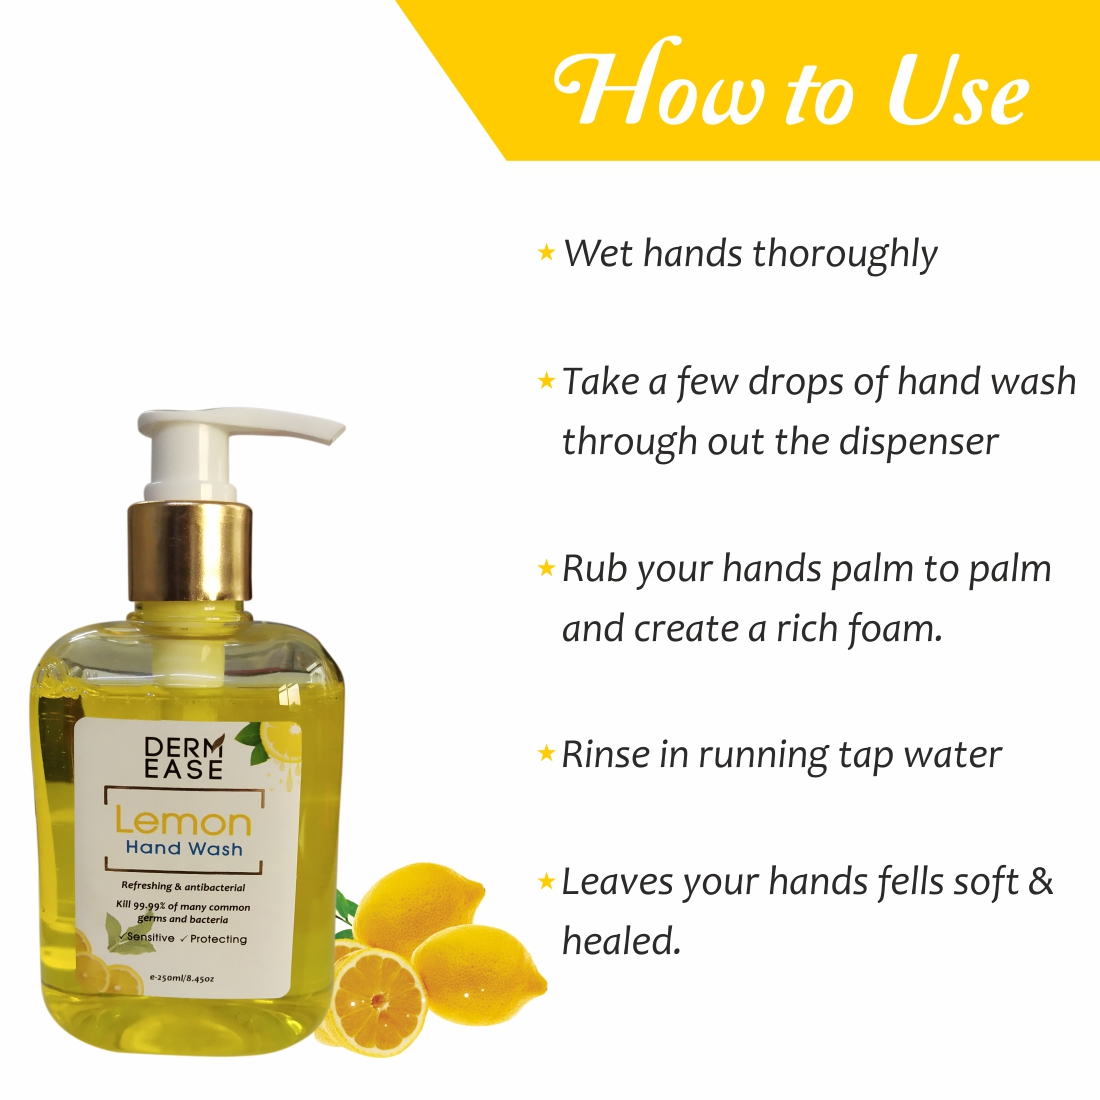 DERM EASE Lemon Hand Wash